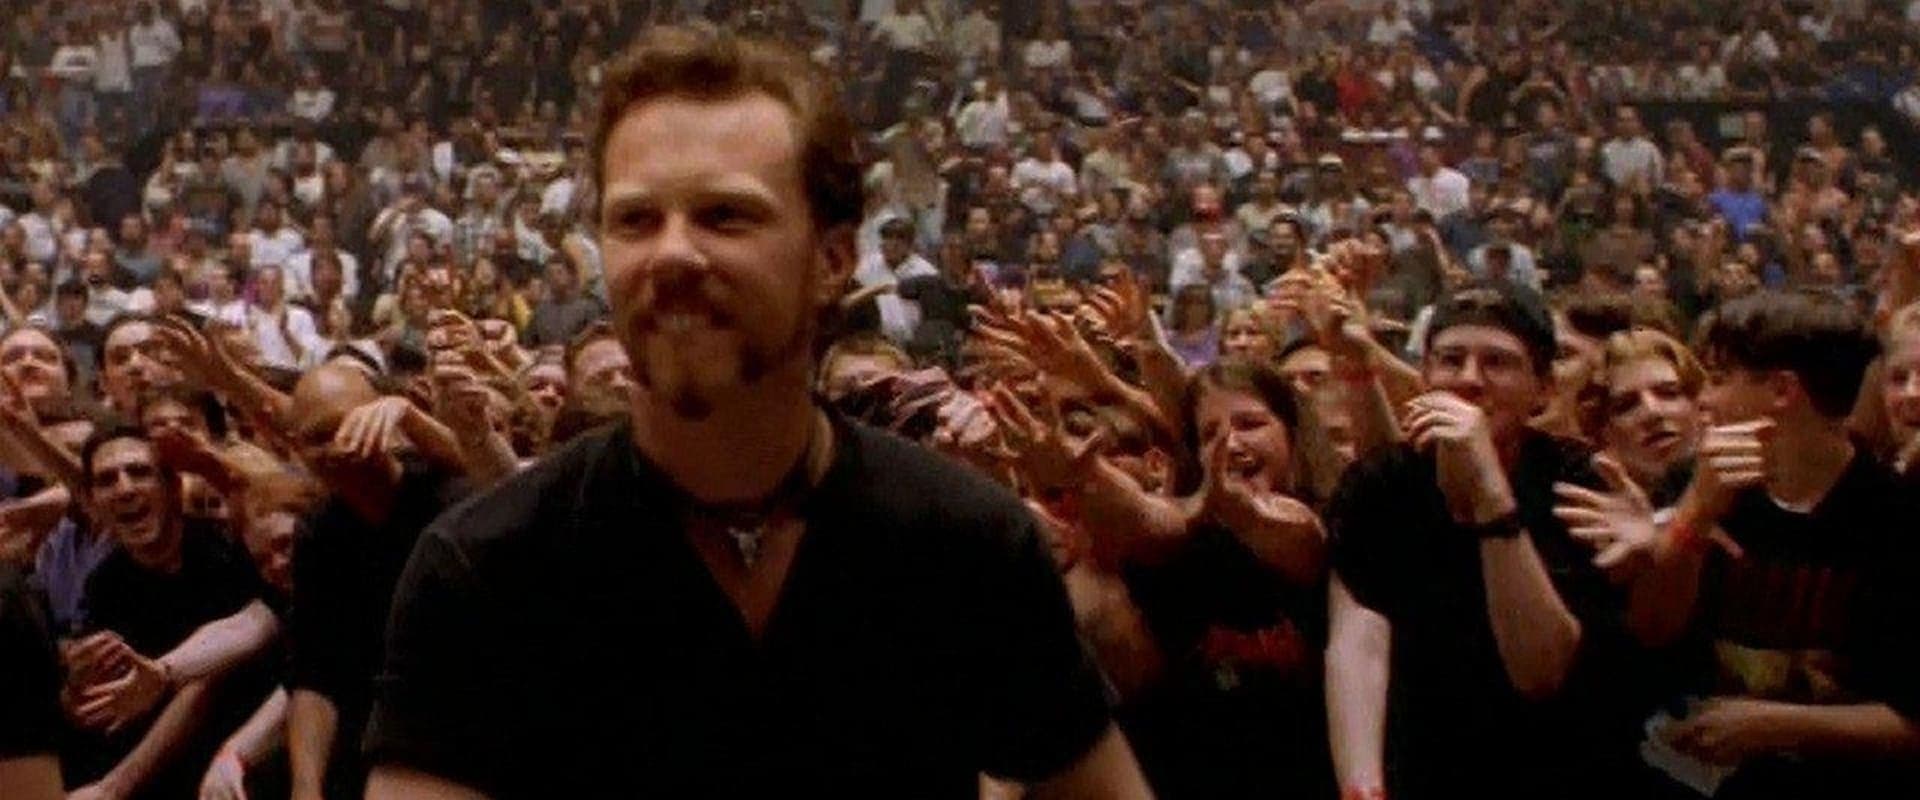 Metallica: Cunning Stunts